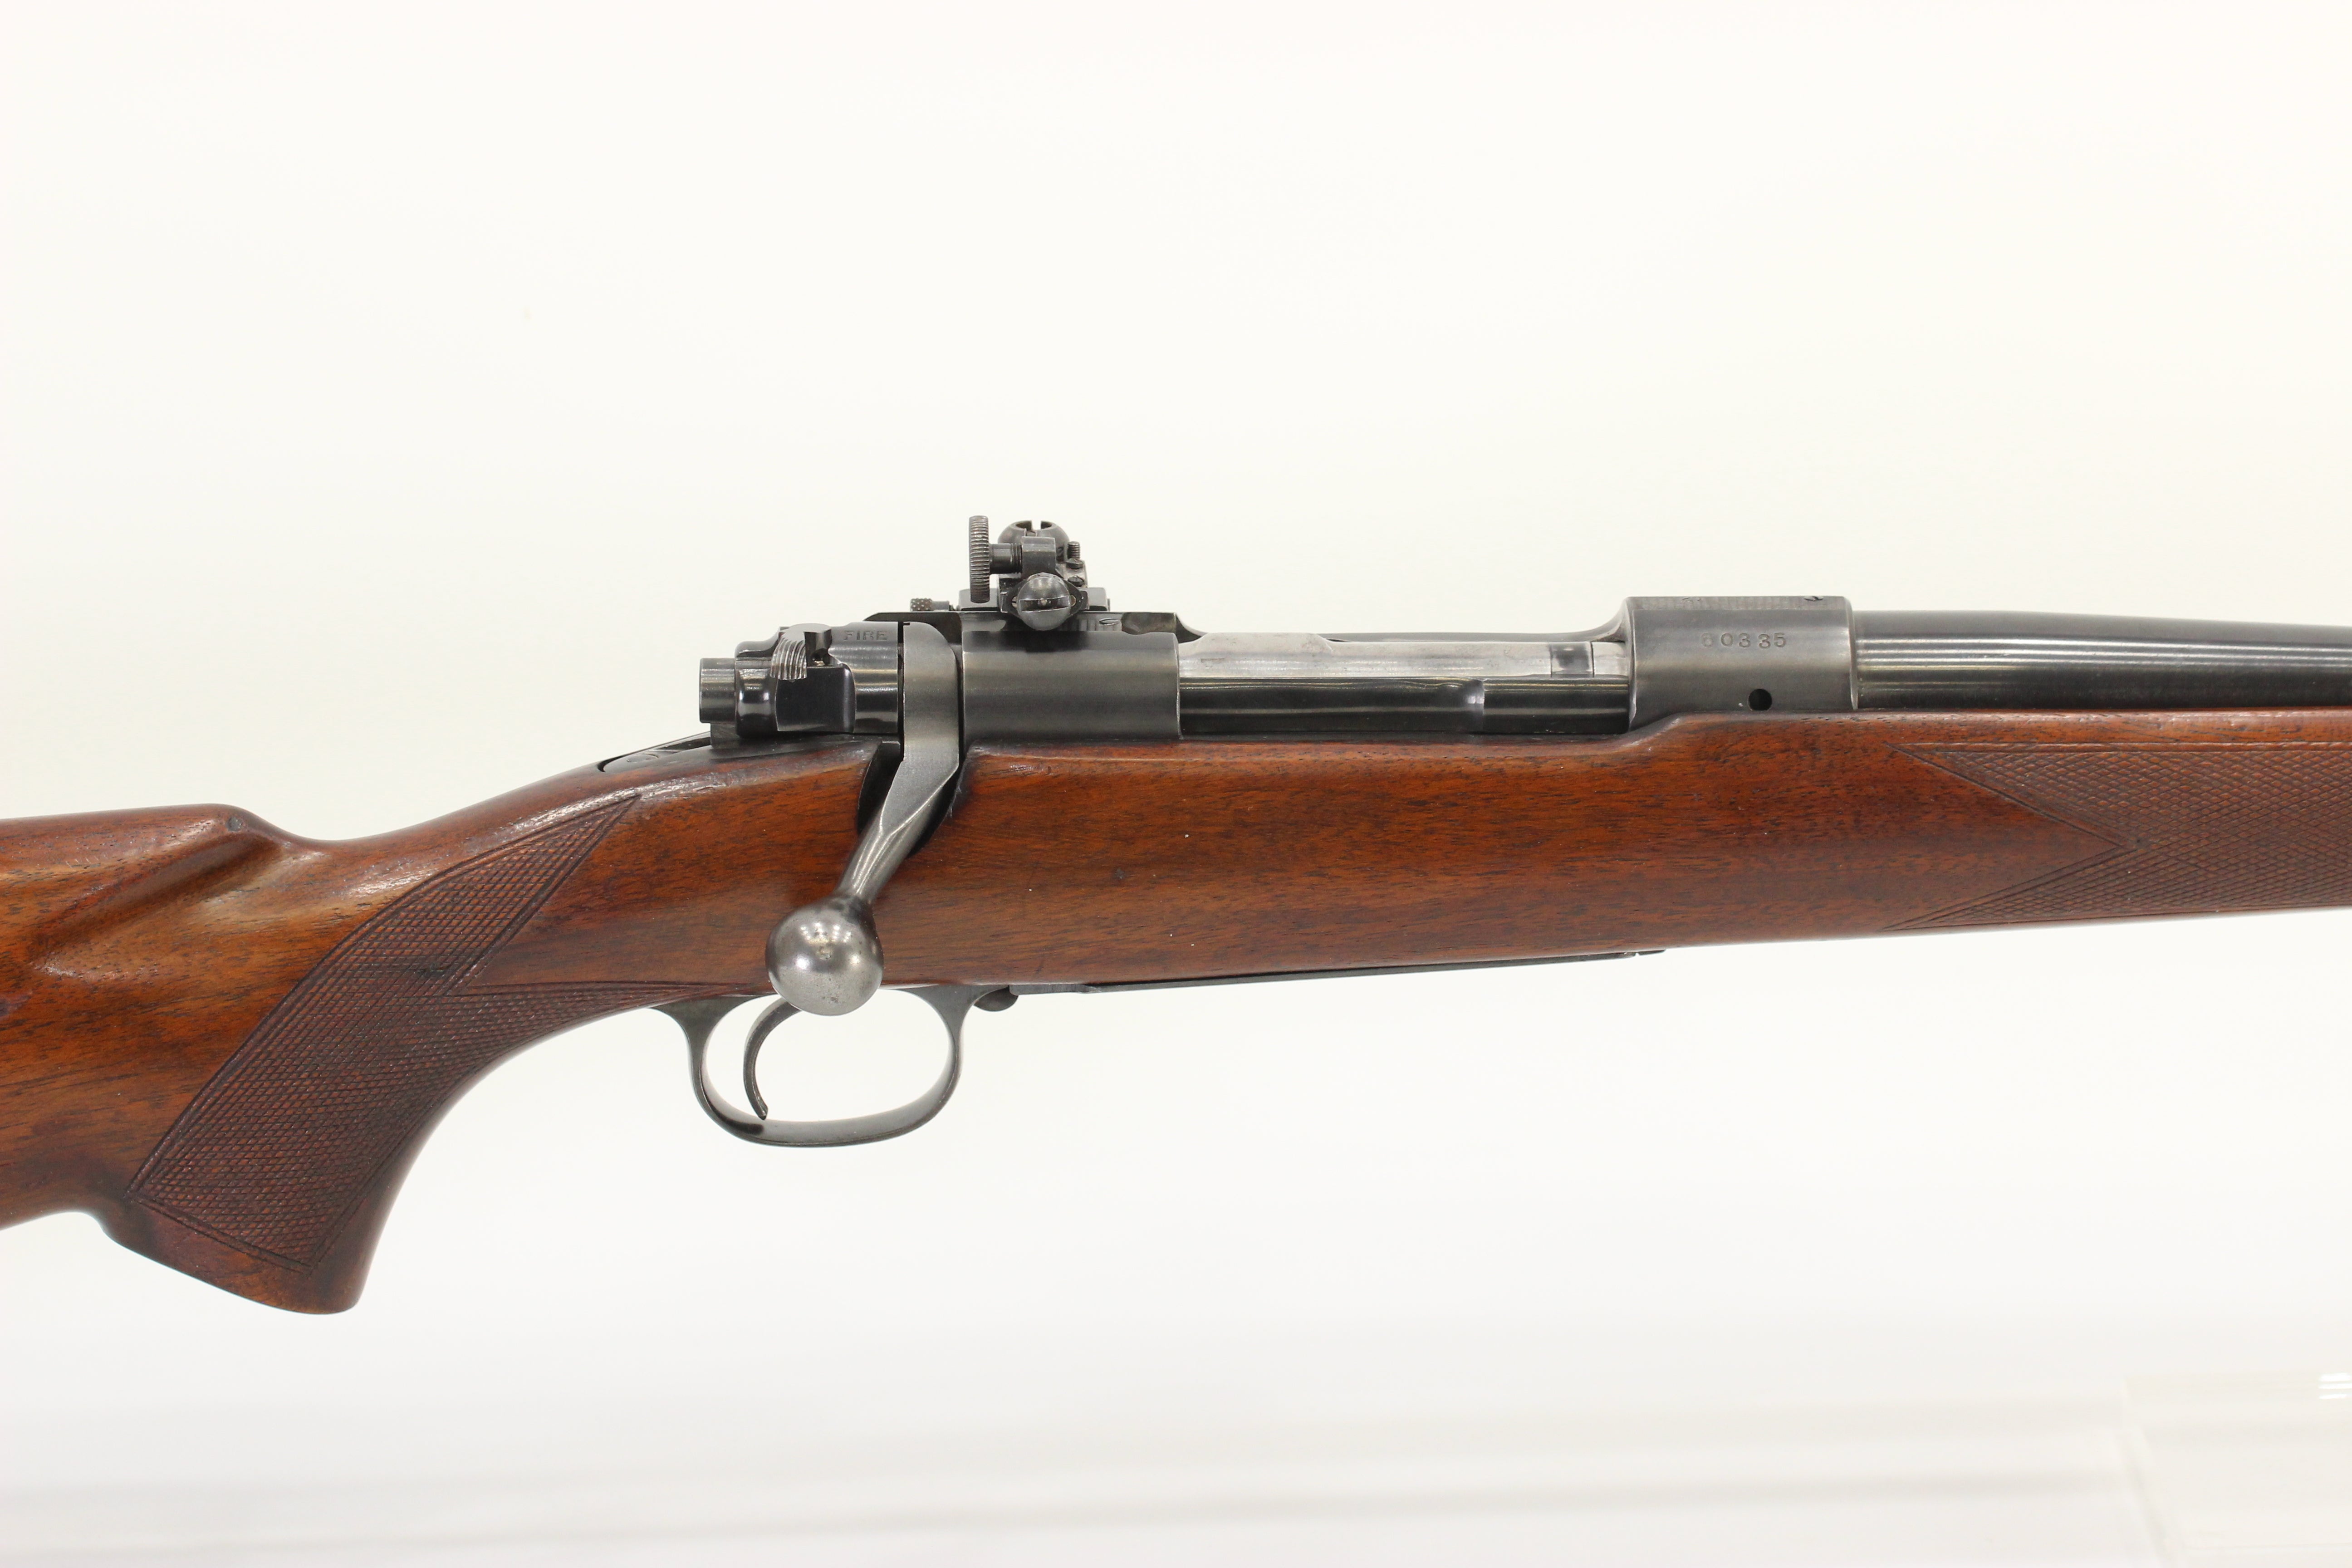 .30 GOV'T. '06 Rifle - 1947